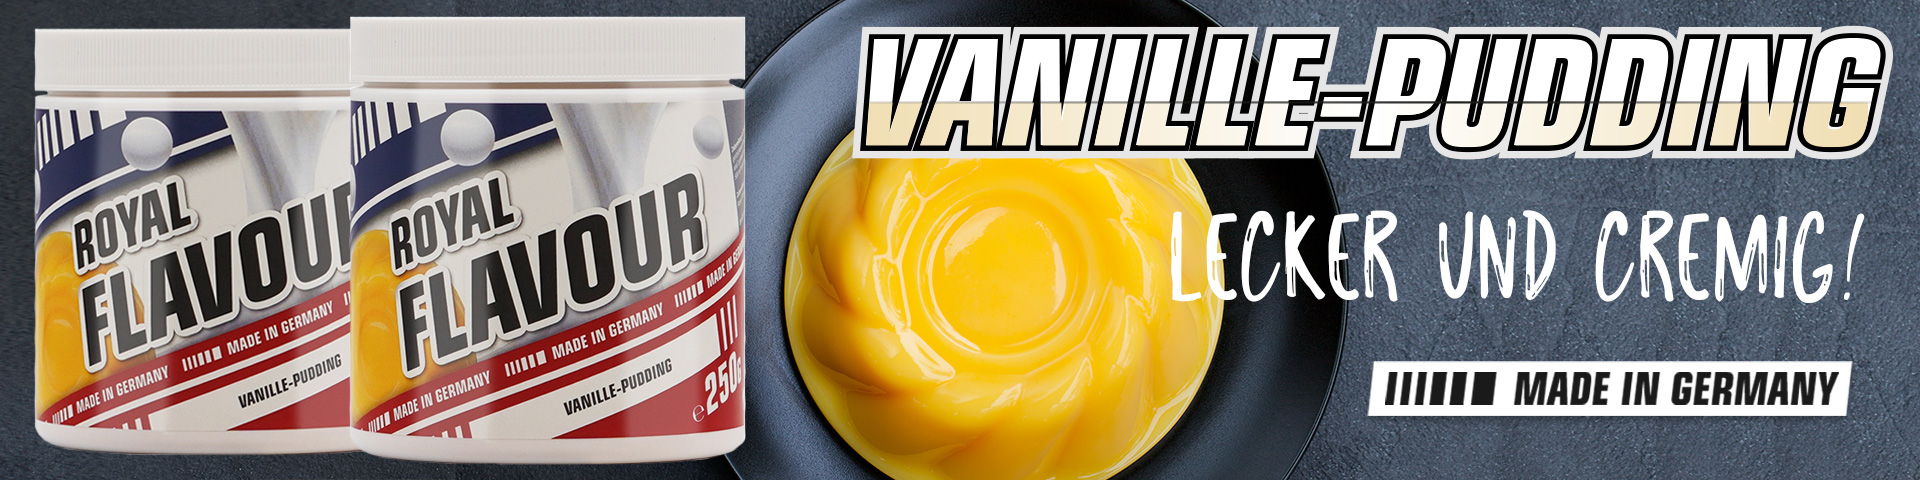 rf-vanille-pudding.jpg